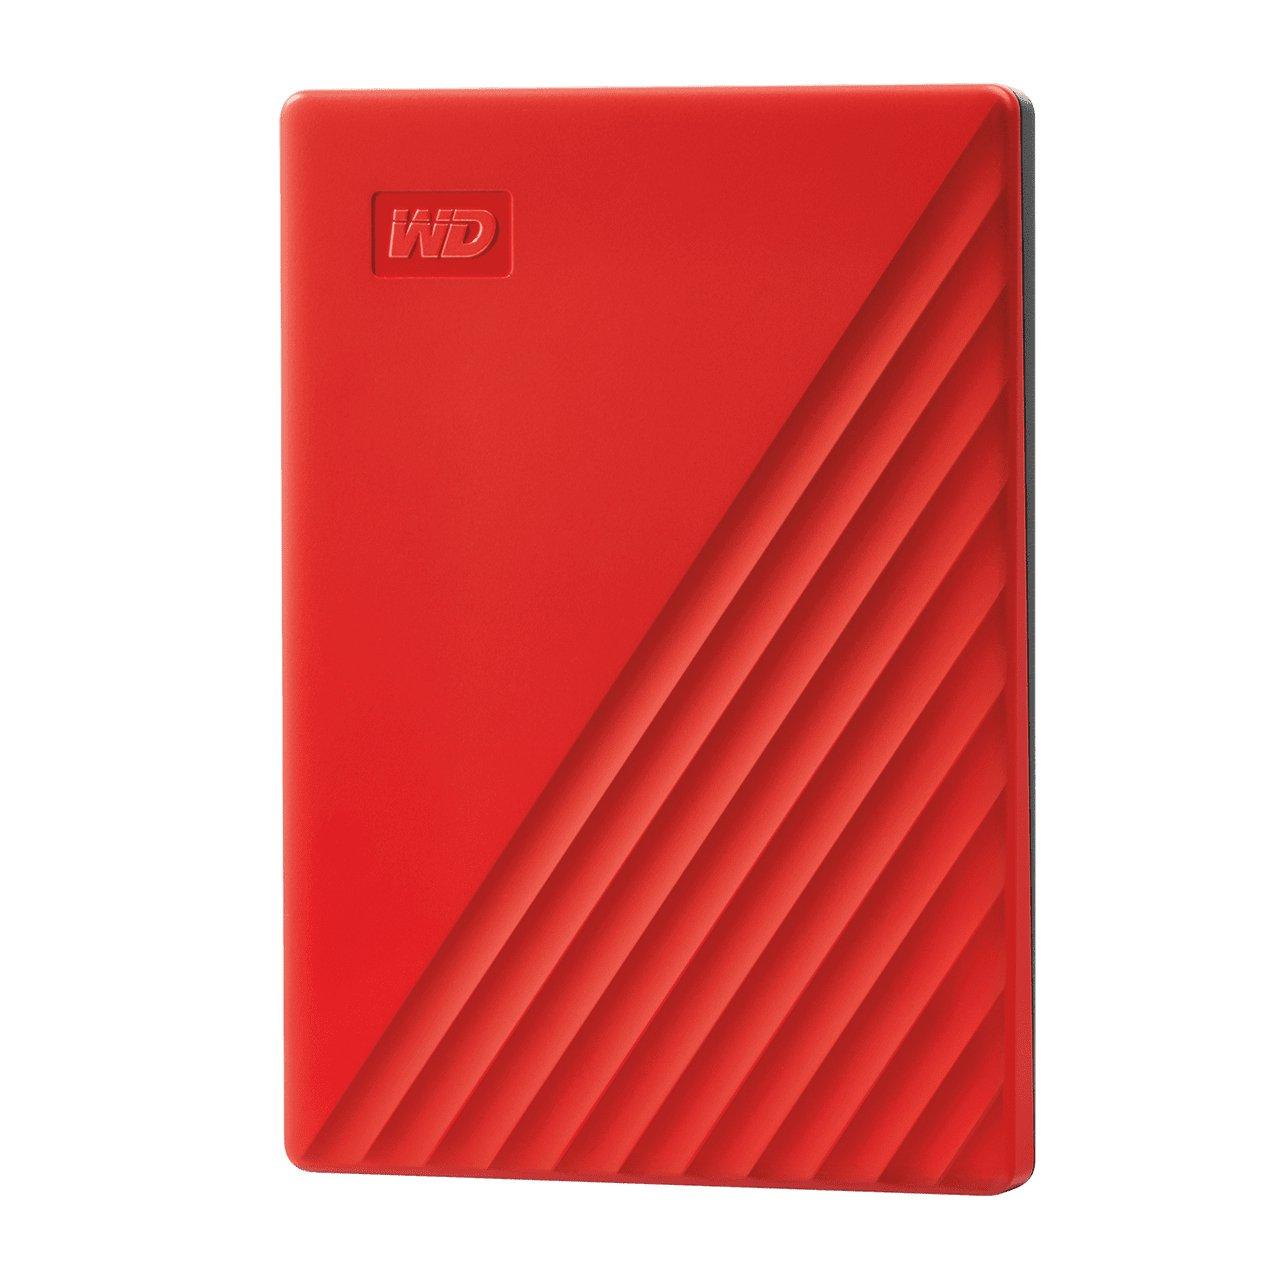 WD Disco rigido esterno Western Digital My Passport 4 TB rosso wd